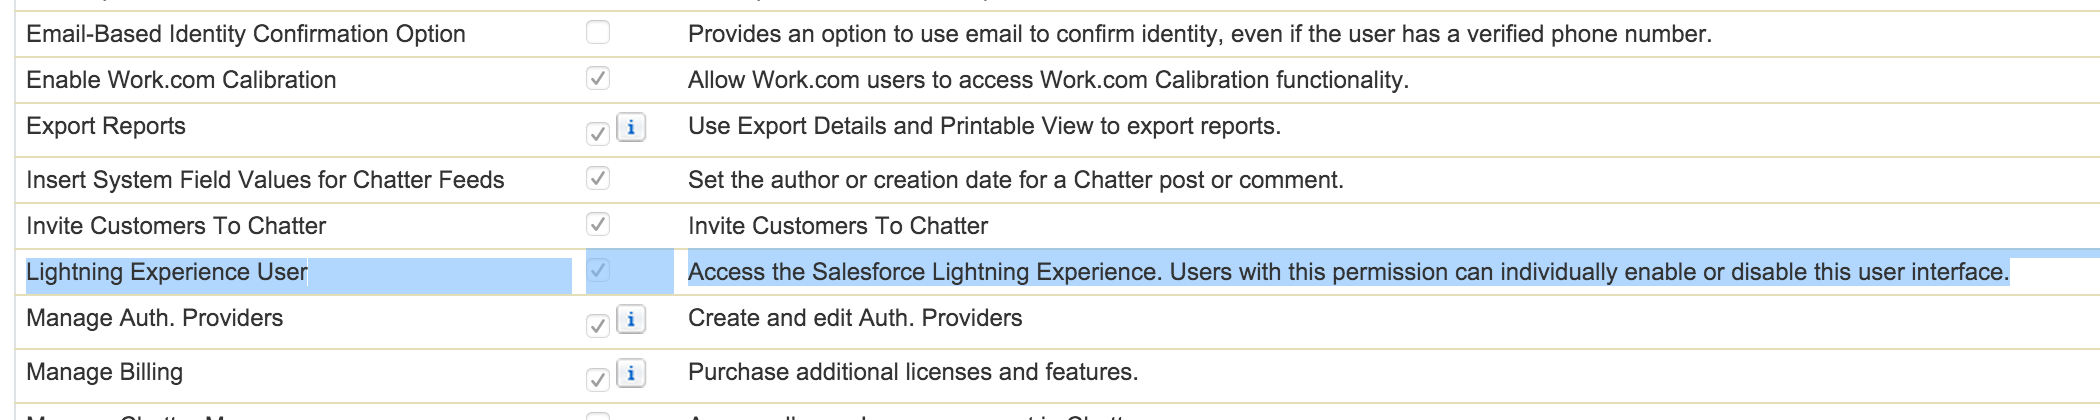 Lightning Experience User